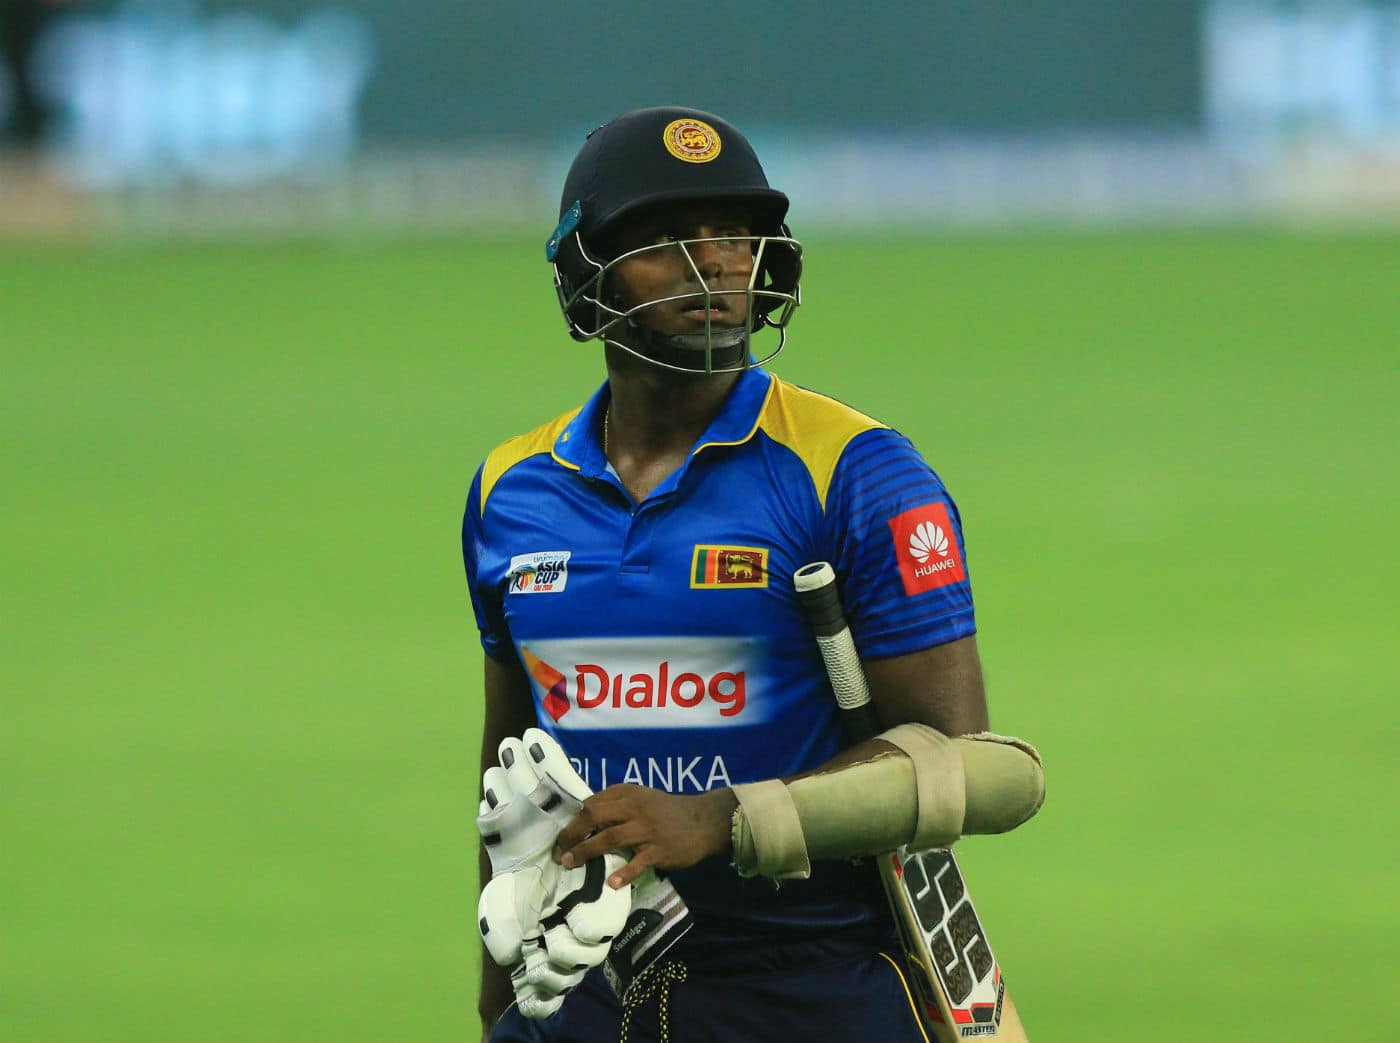 Sri lanka included ambidextrous bowler Kamindu Mendis in T20 squad